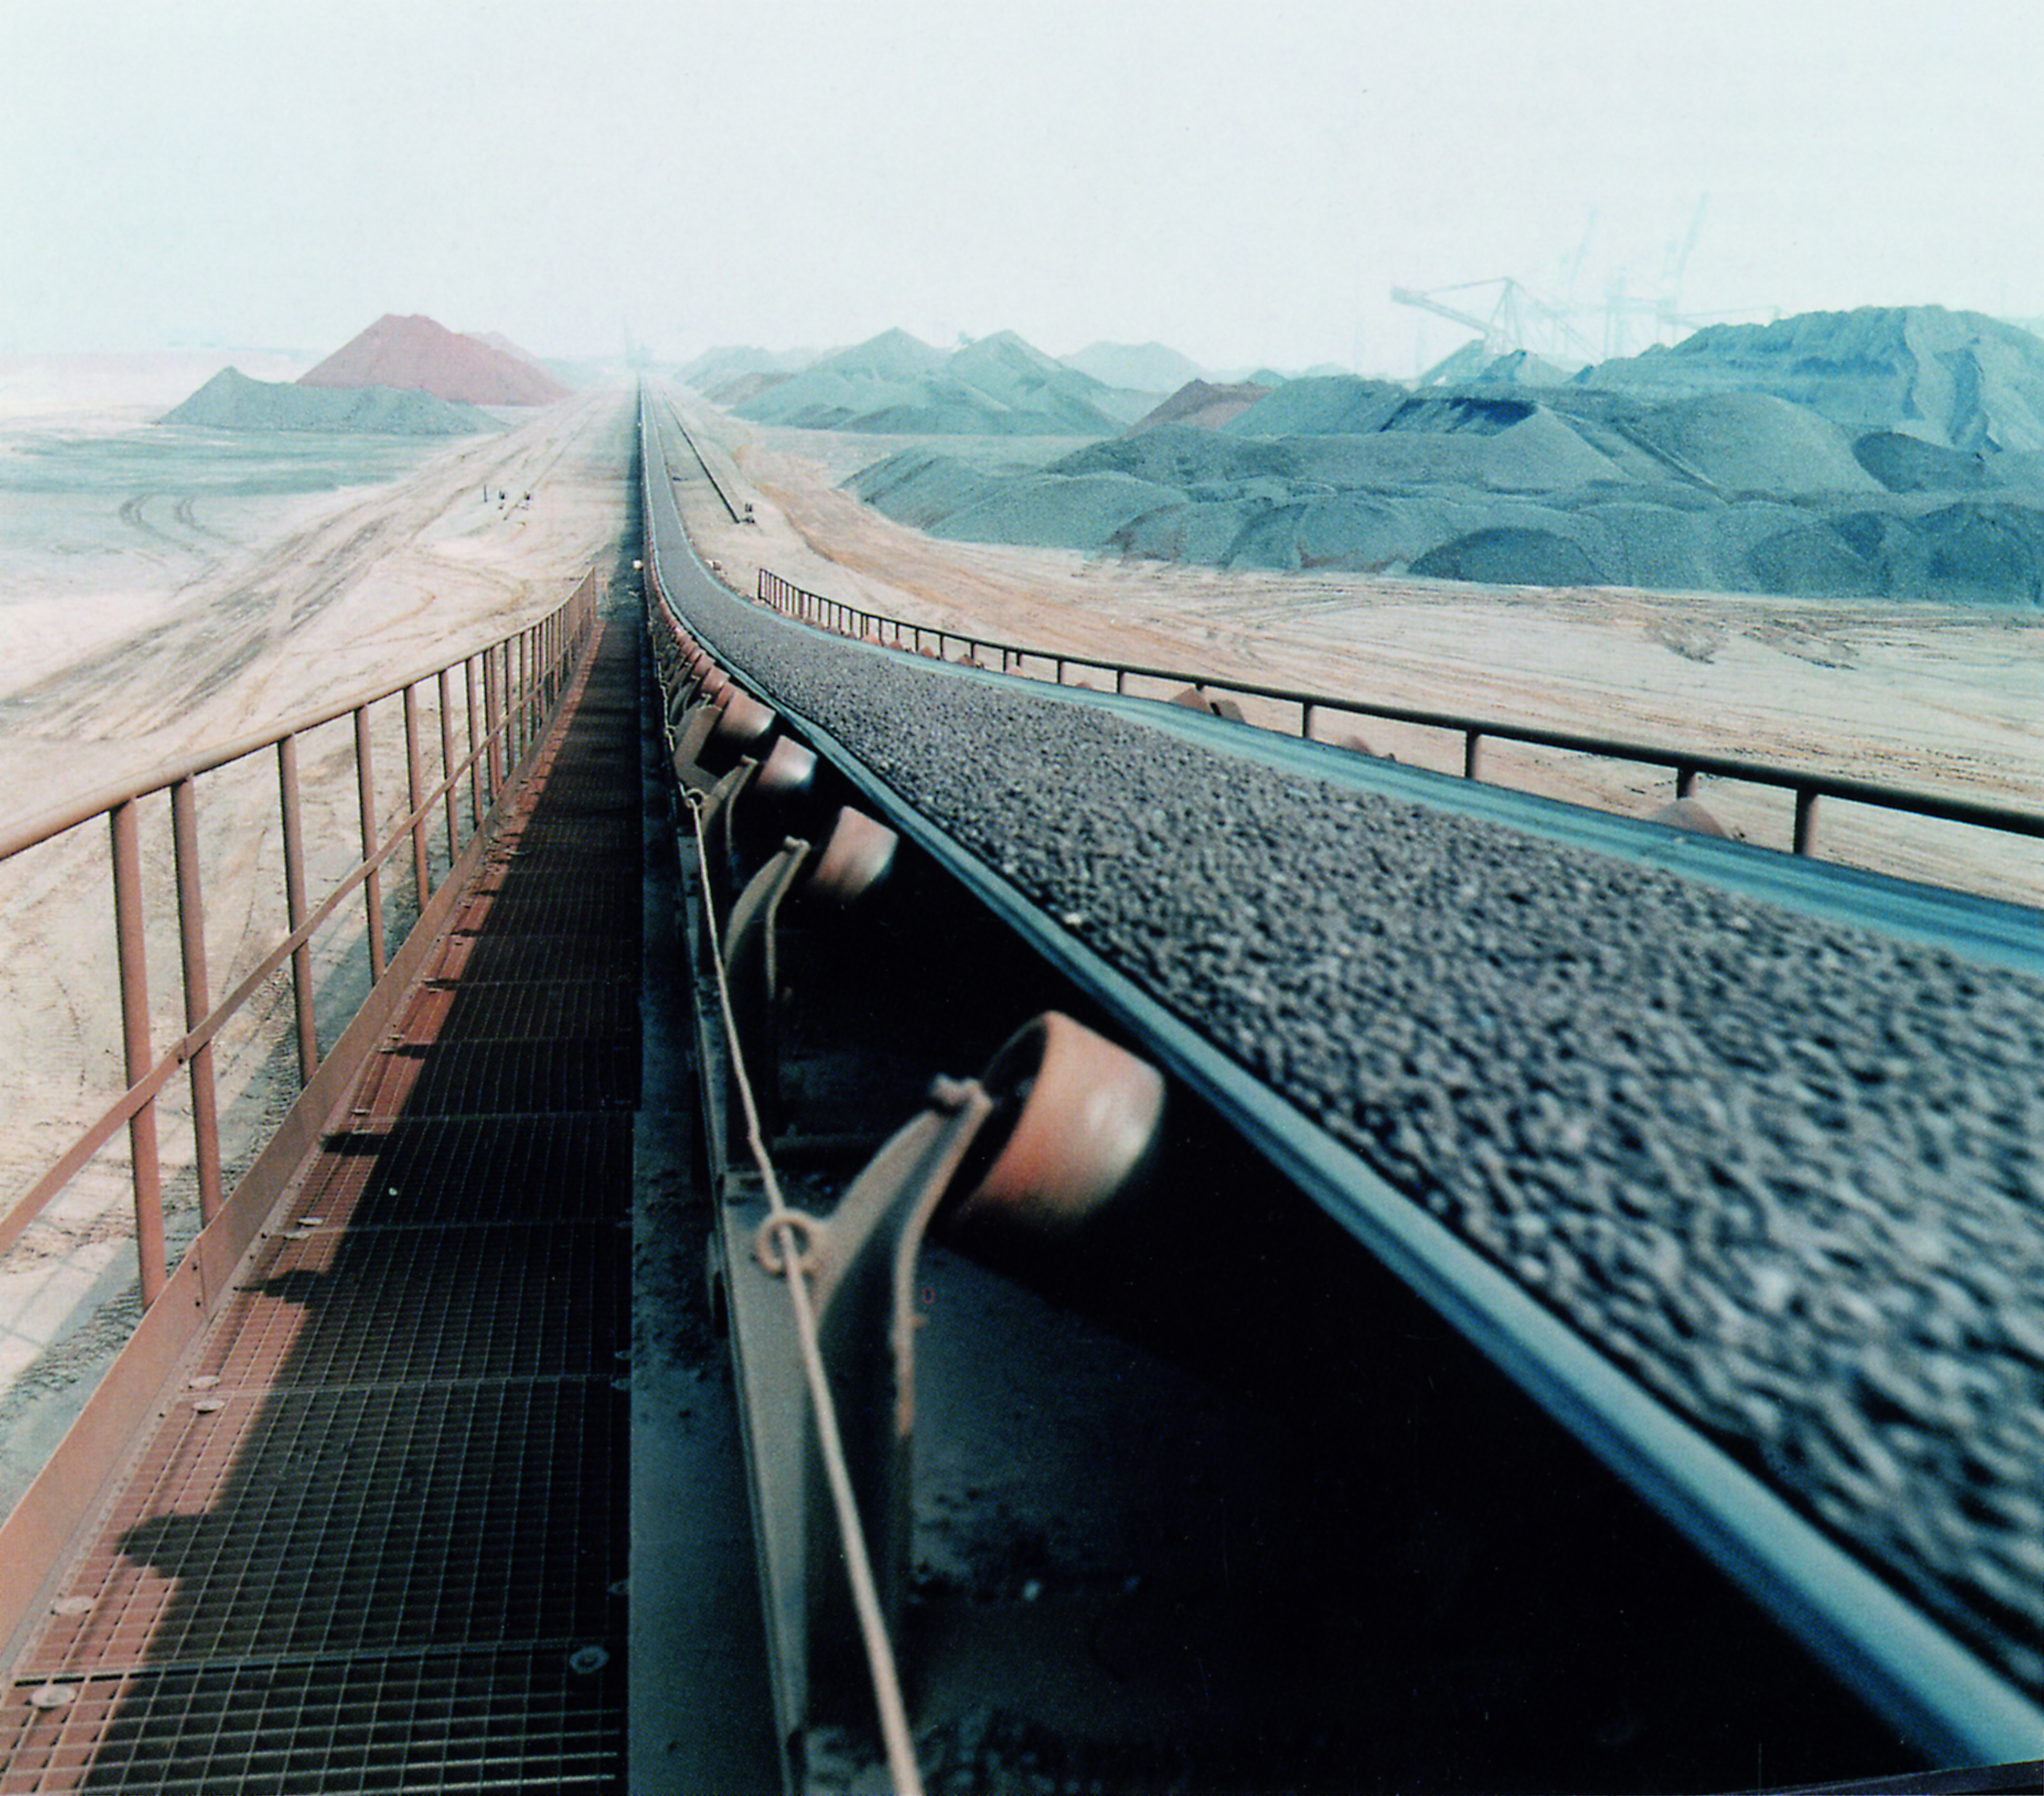 Overland conveyors